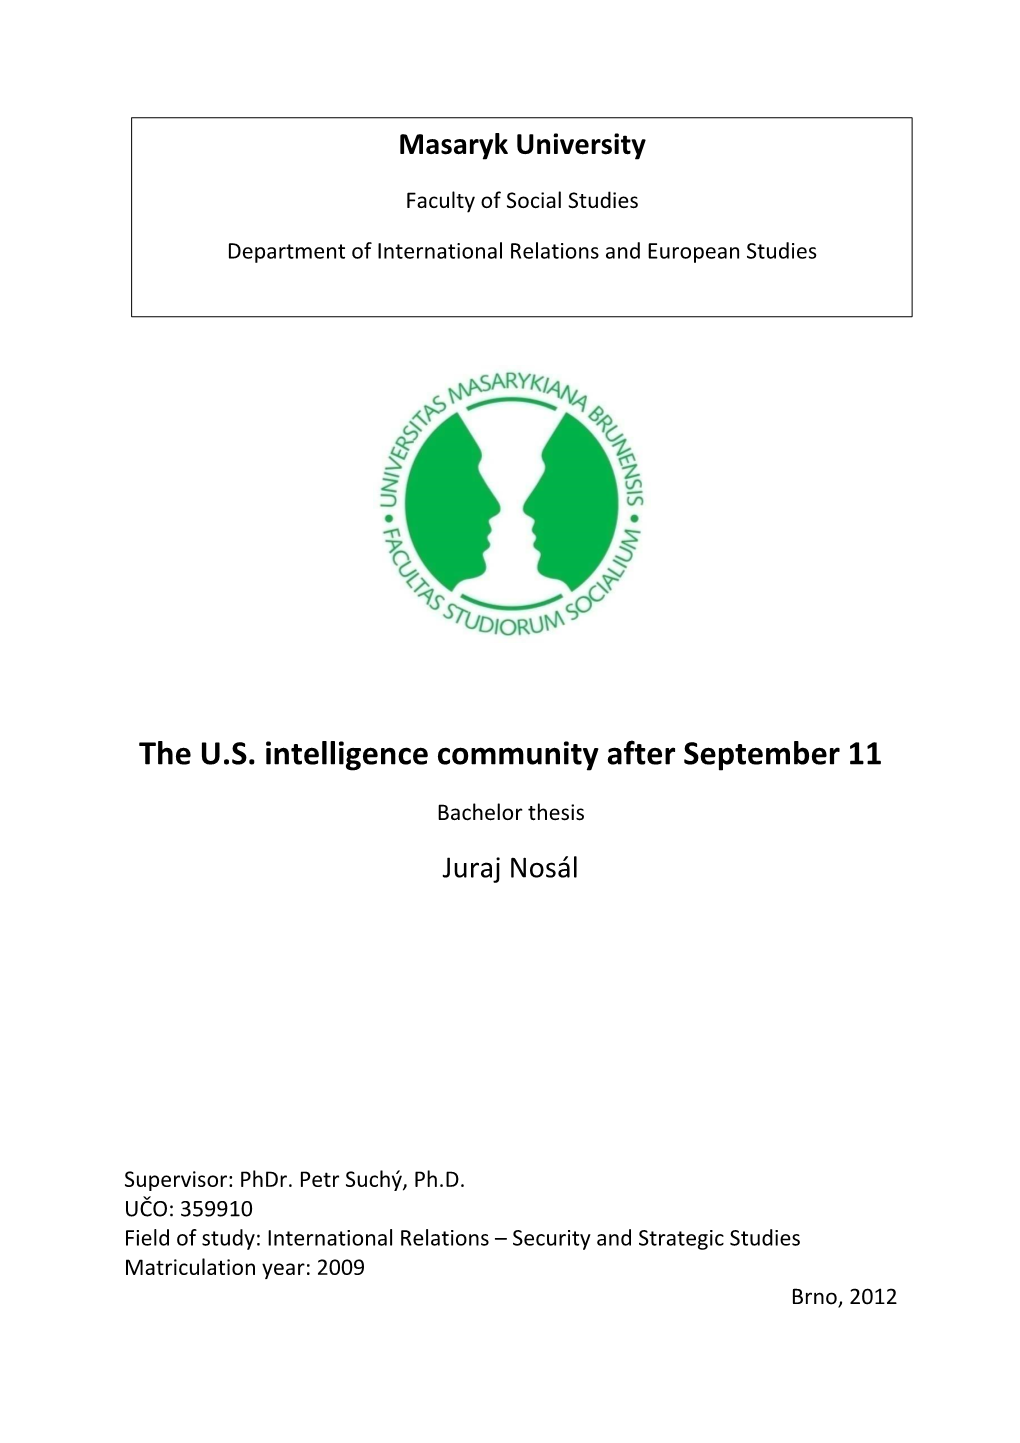 The US Intelligence Community After September 11 Final